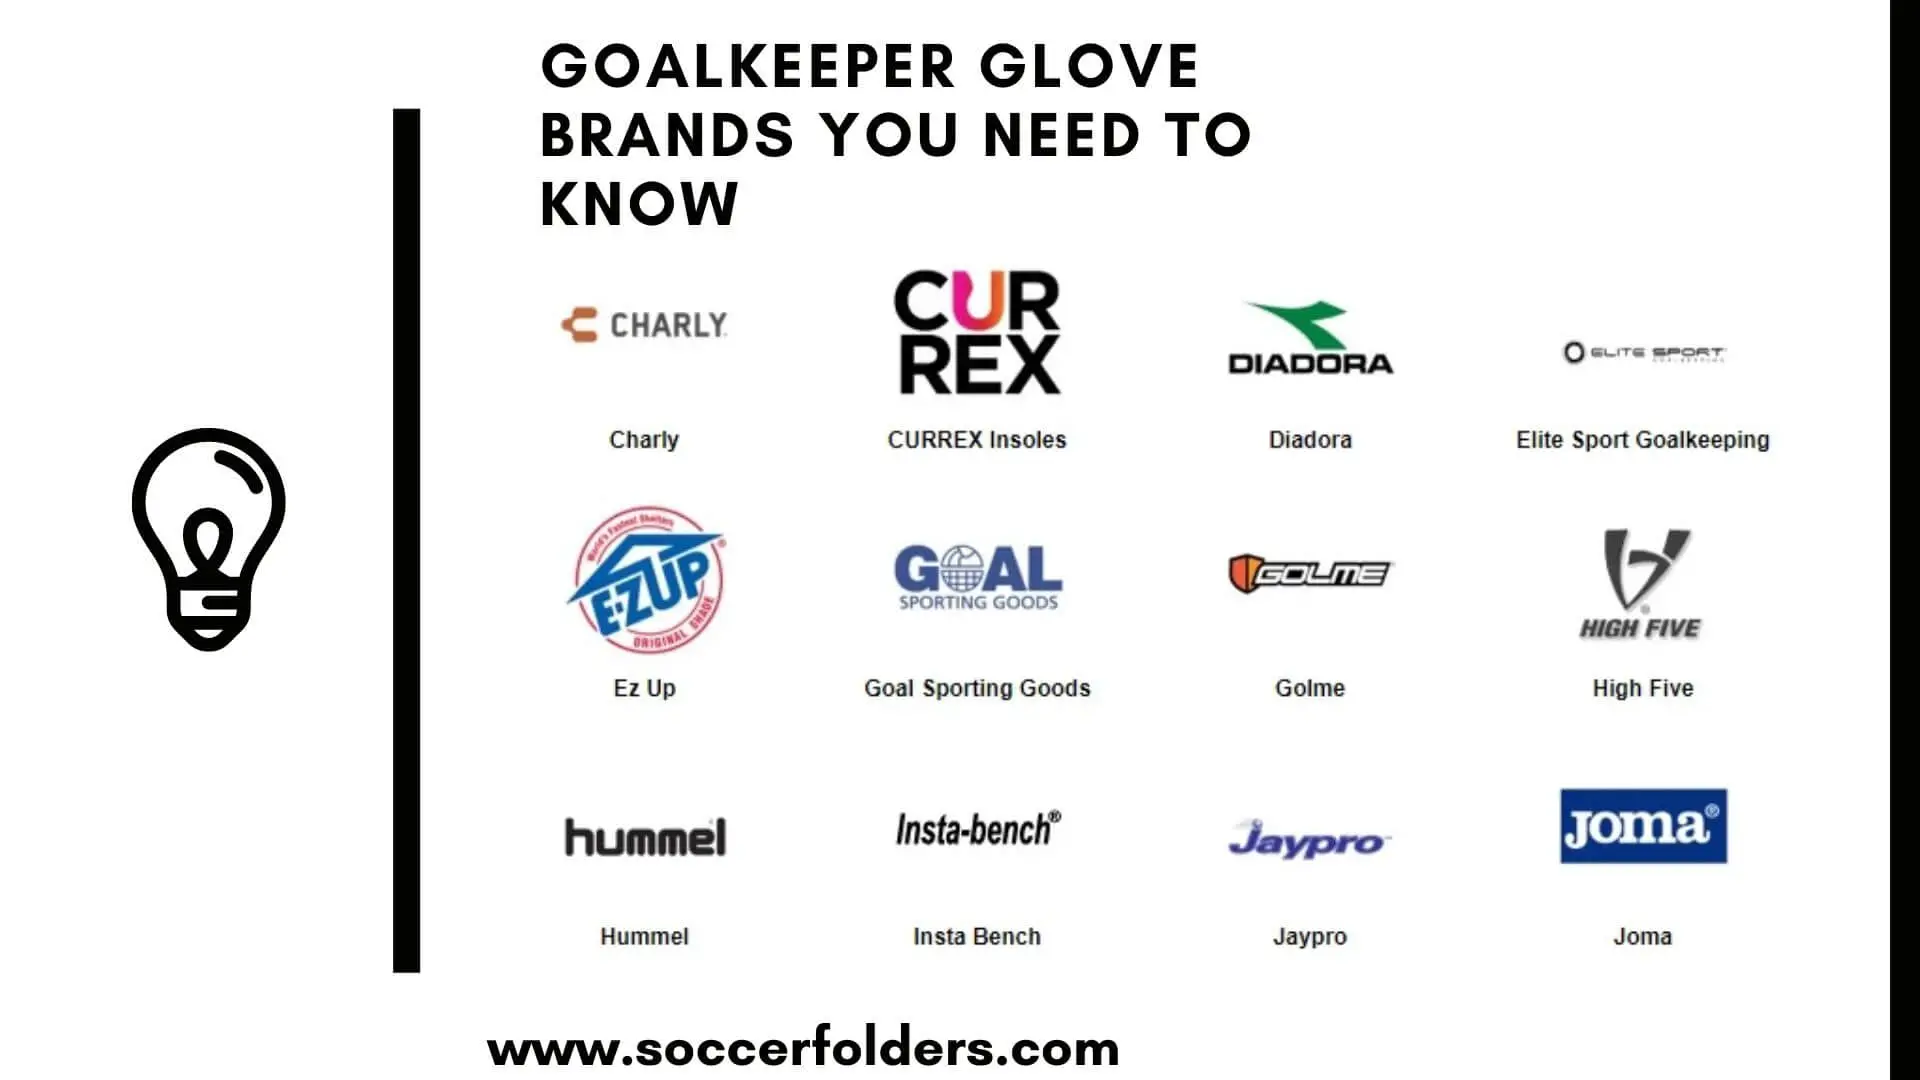 Goalkeeper glove brands - Featured image